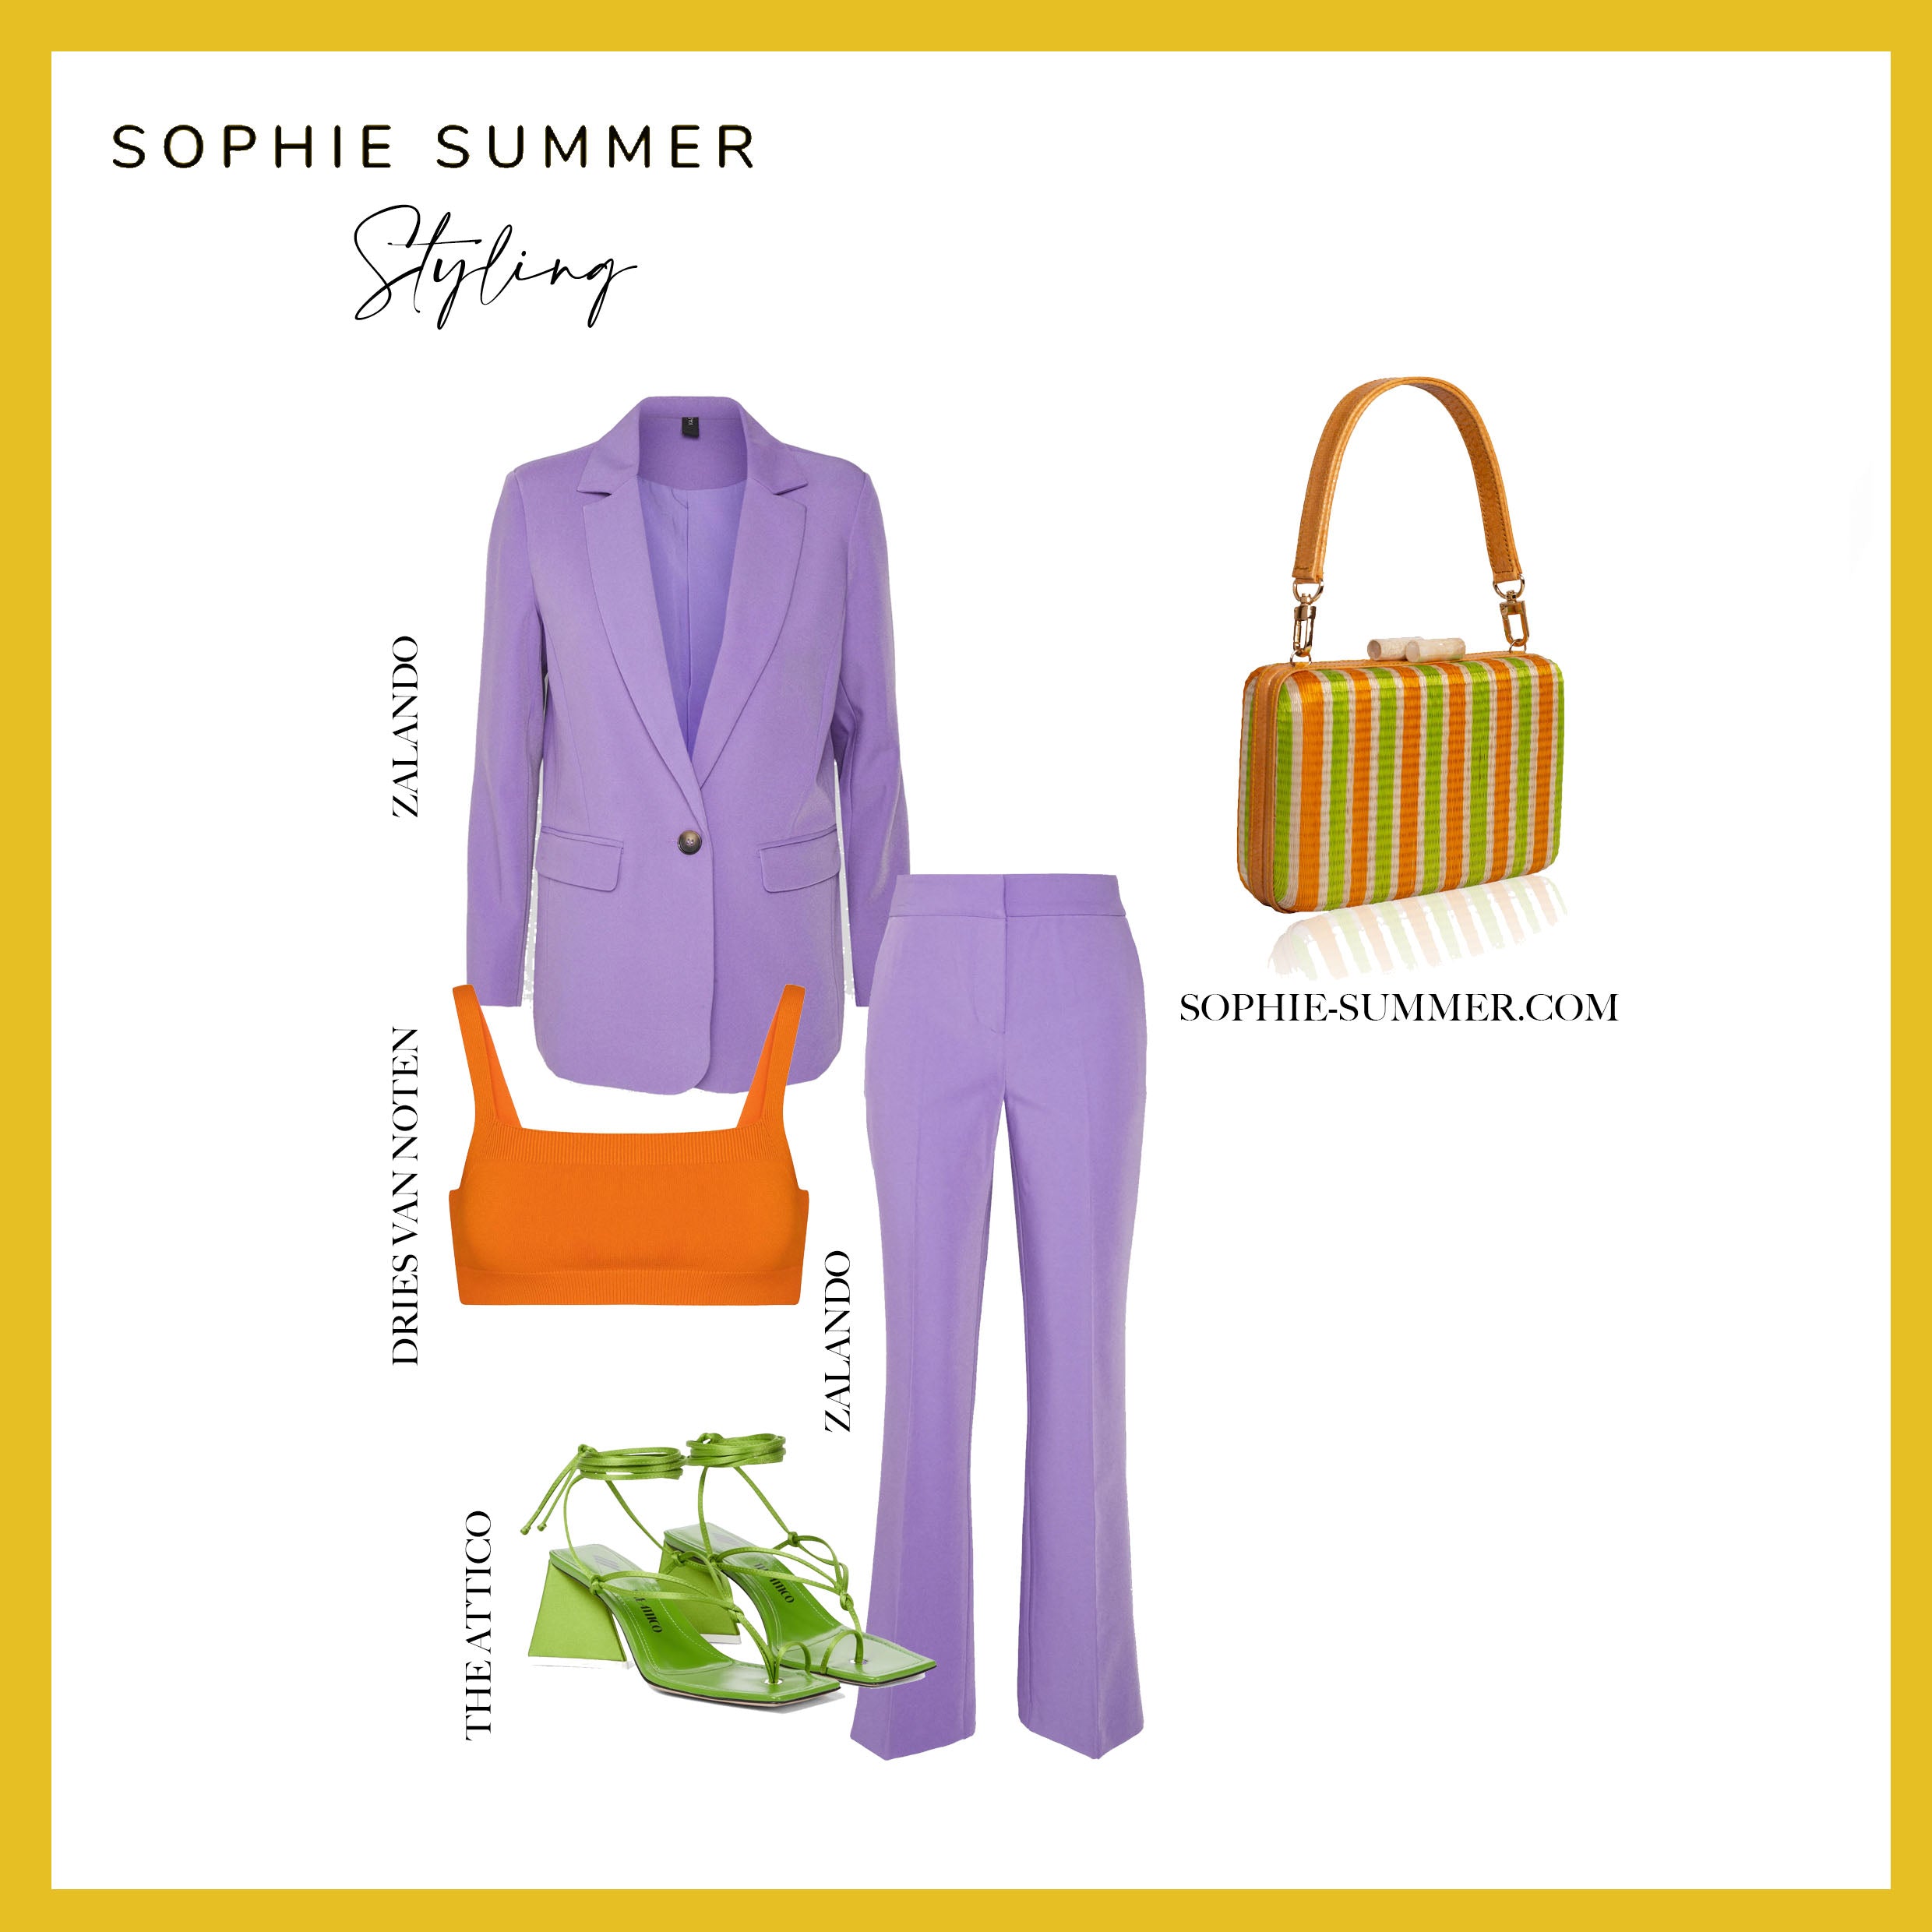 Sophie Summer colour clash image trend outfit.